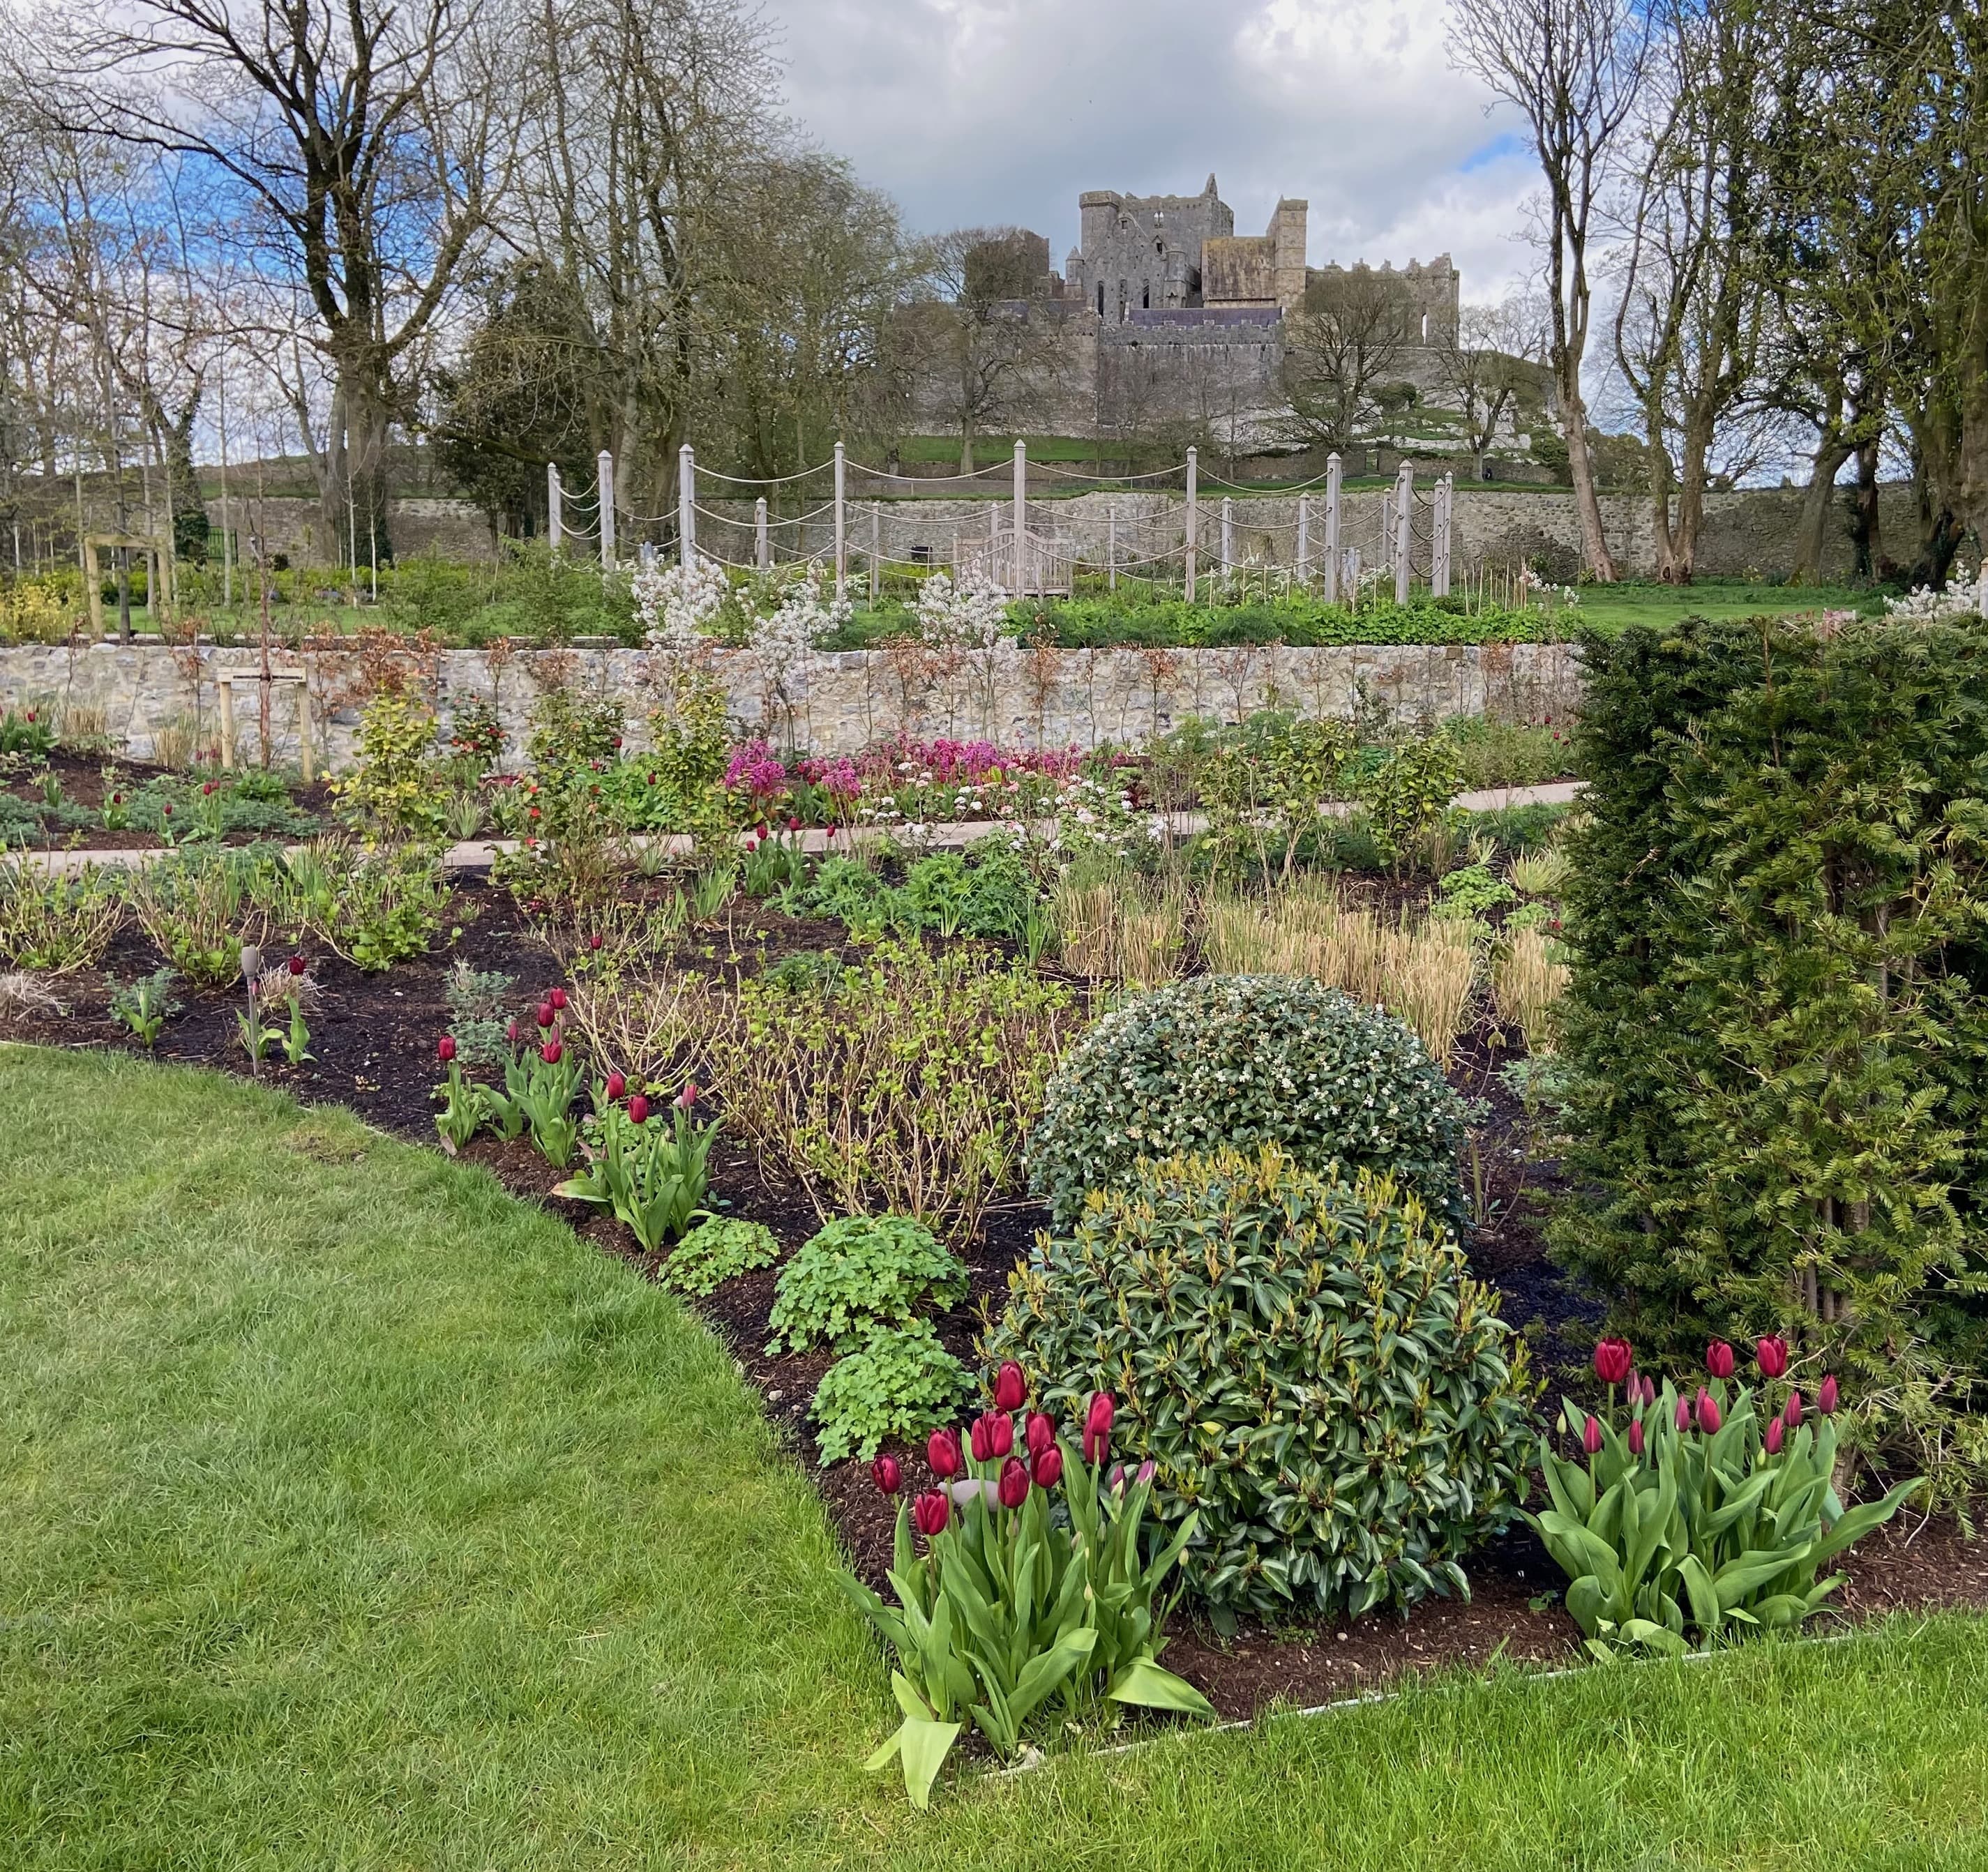 The garden at Cashel Palace